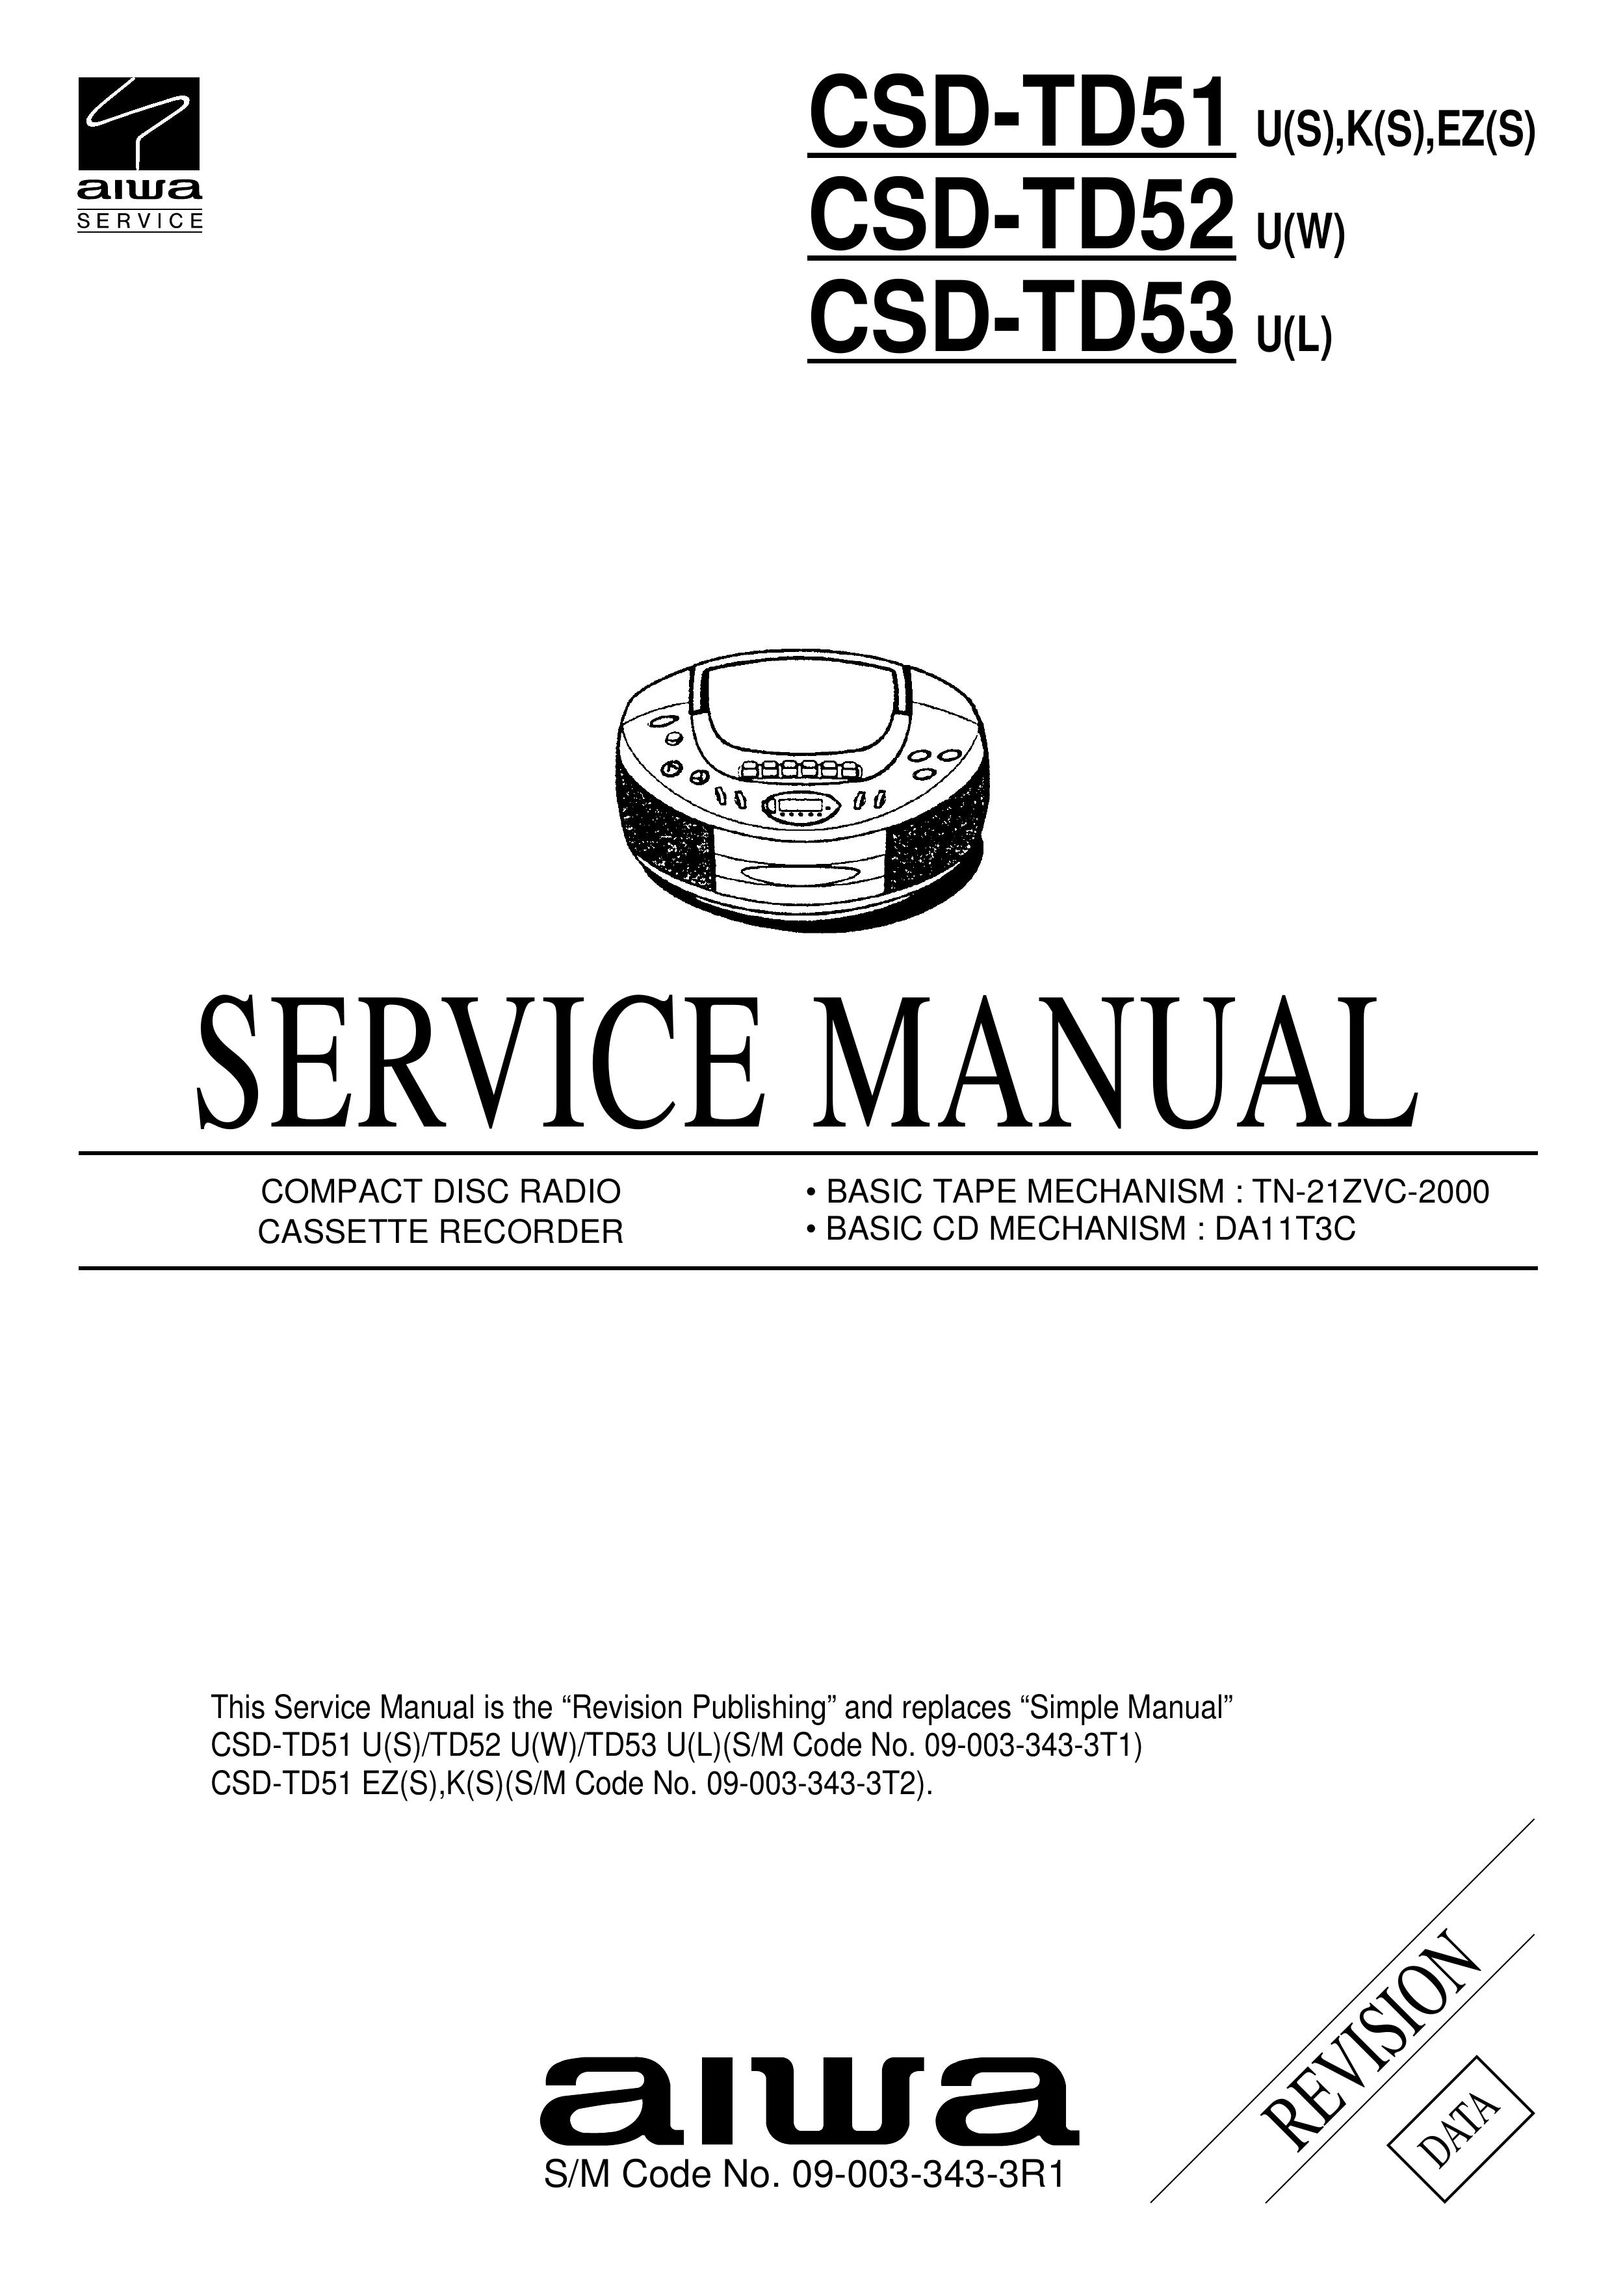 Aiwa CSD-TD53 CD Player User Manual